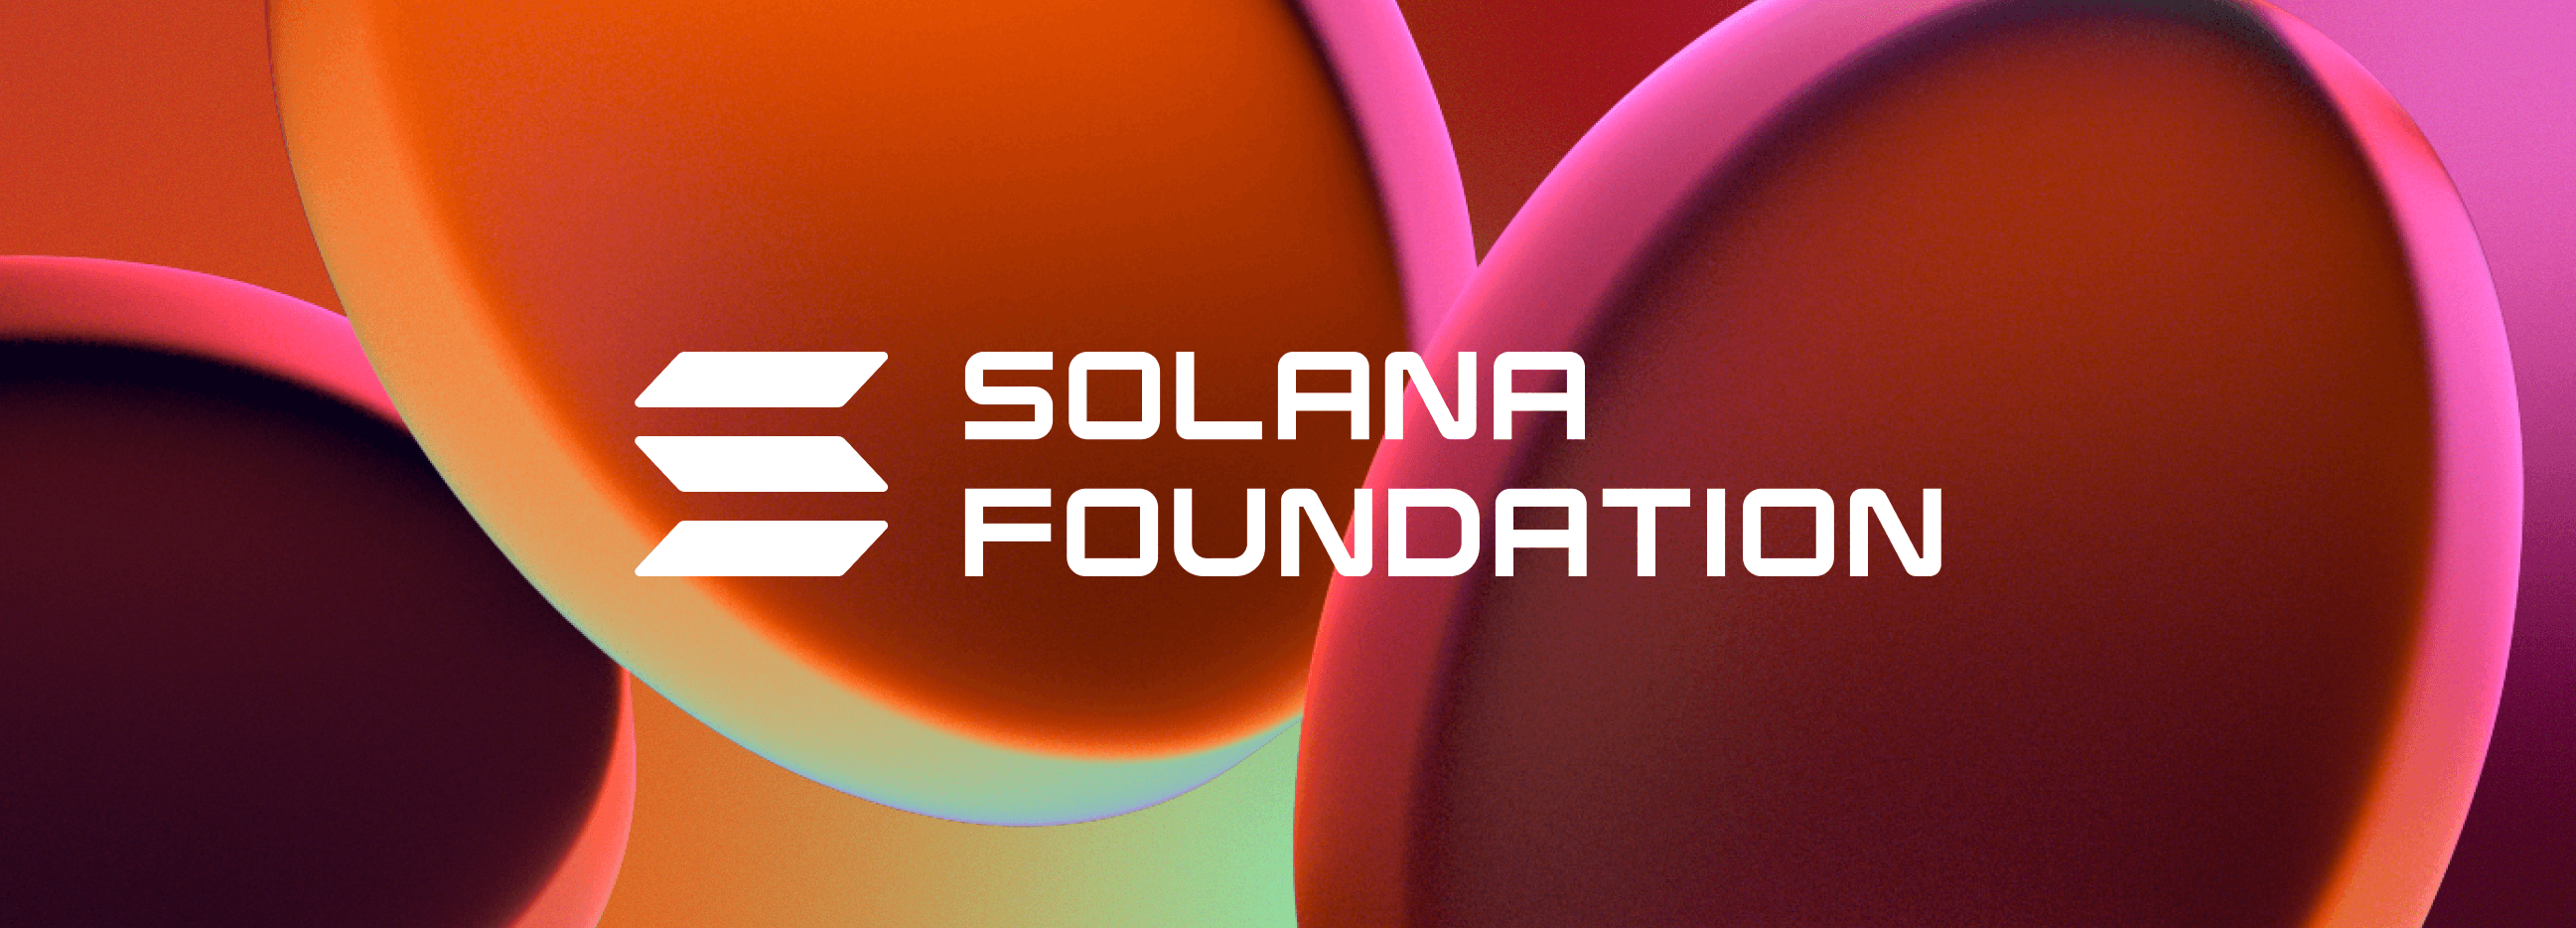 Solana Foundation banner